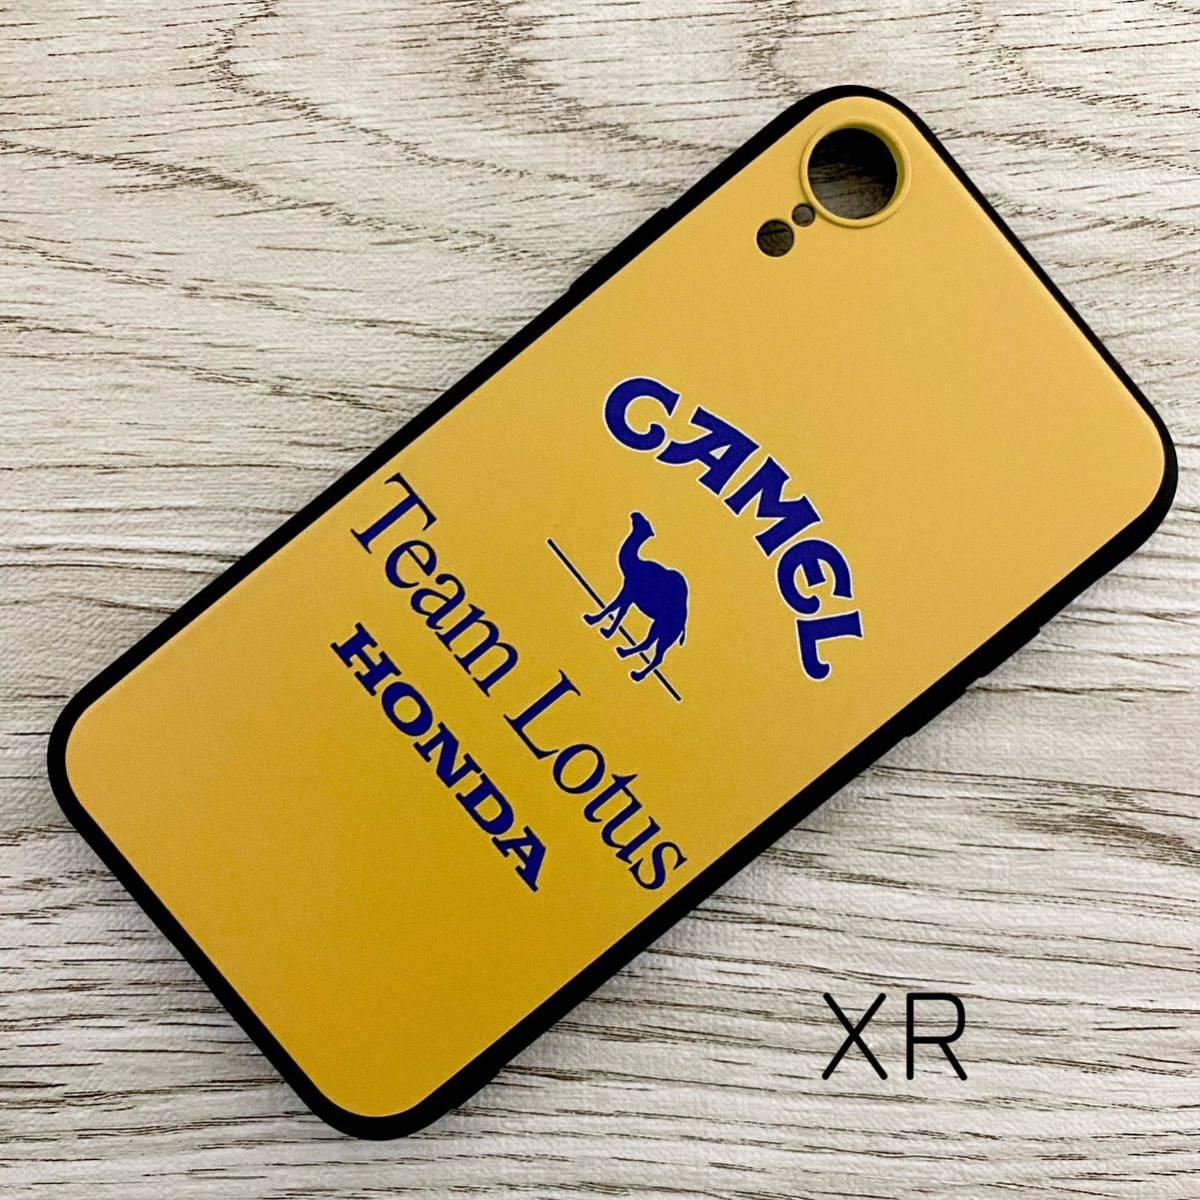  Camel Lotus Honda iPhone XR case F1 i-ll ton * Senna smartphone 